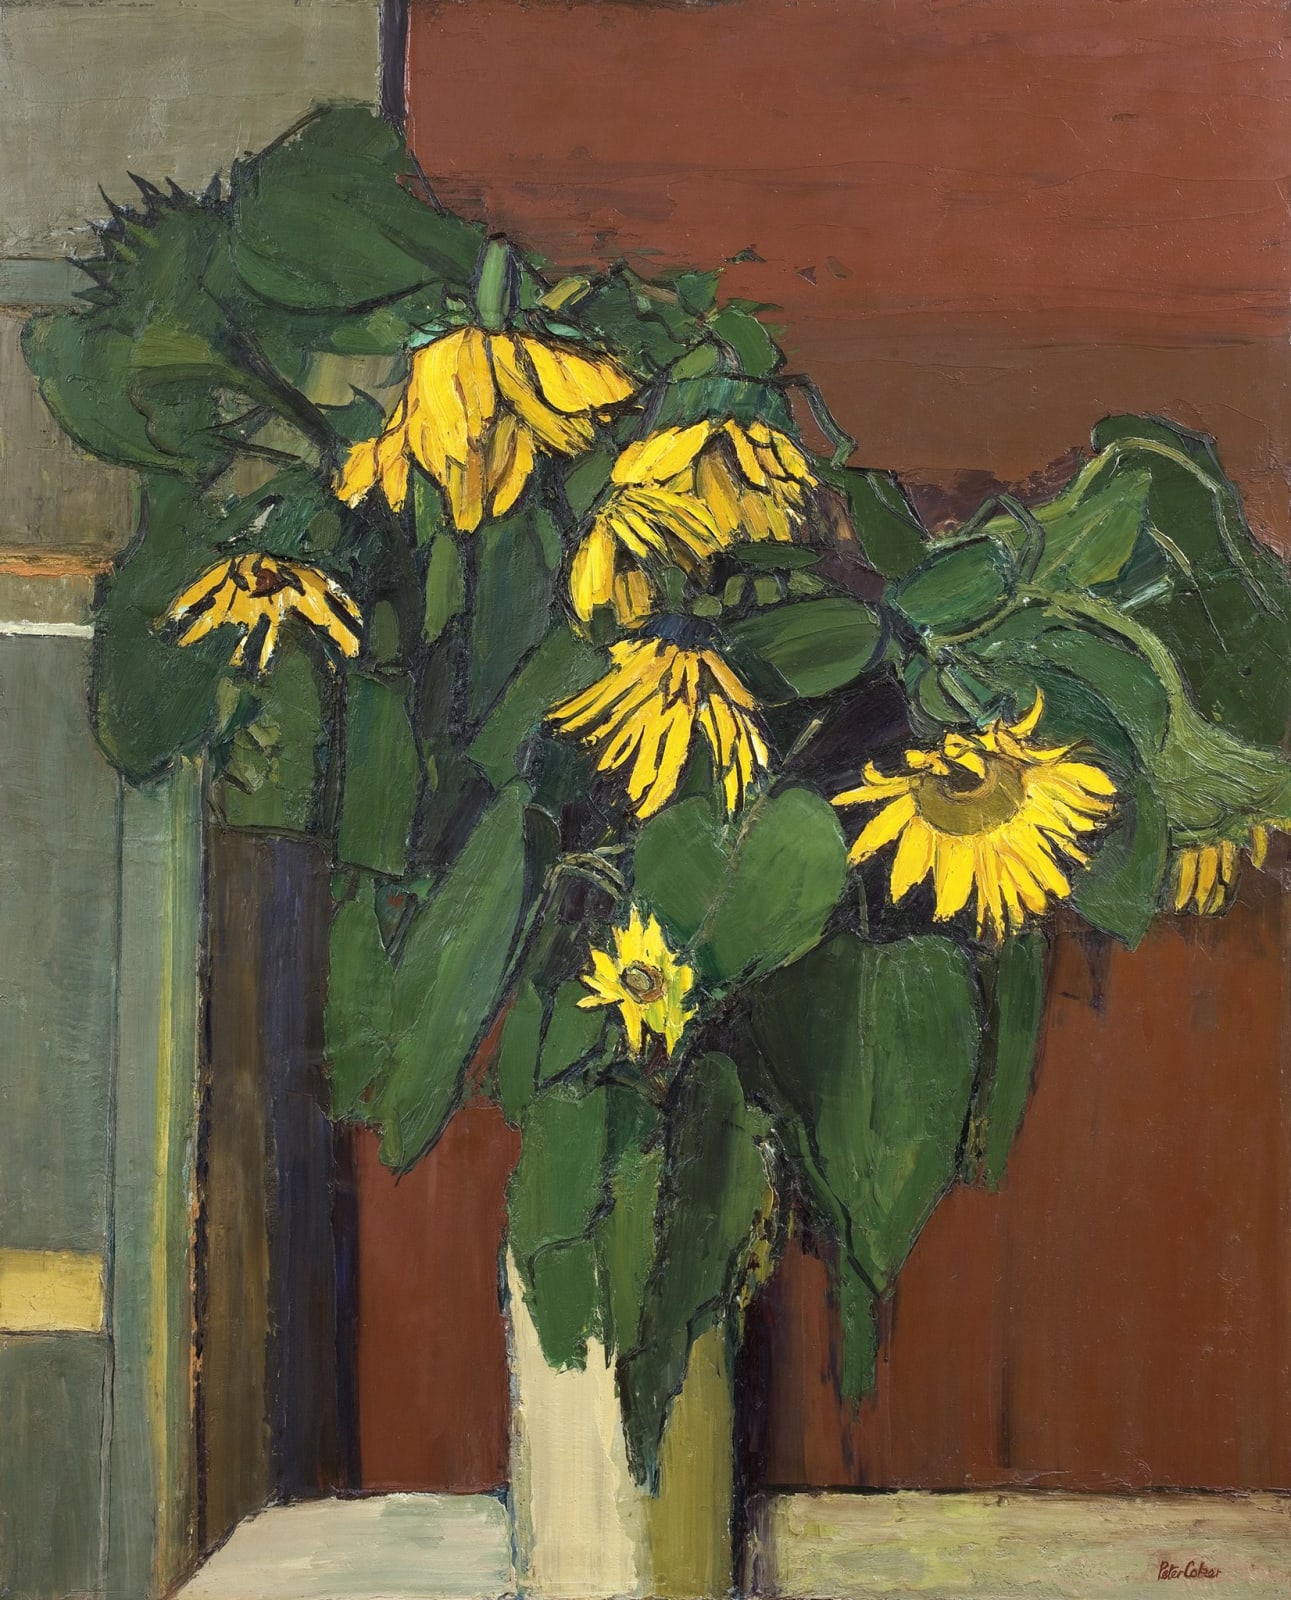 Peter Coker, Sunflowers, 1958